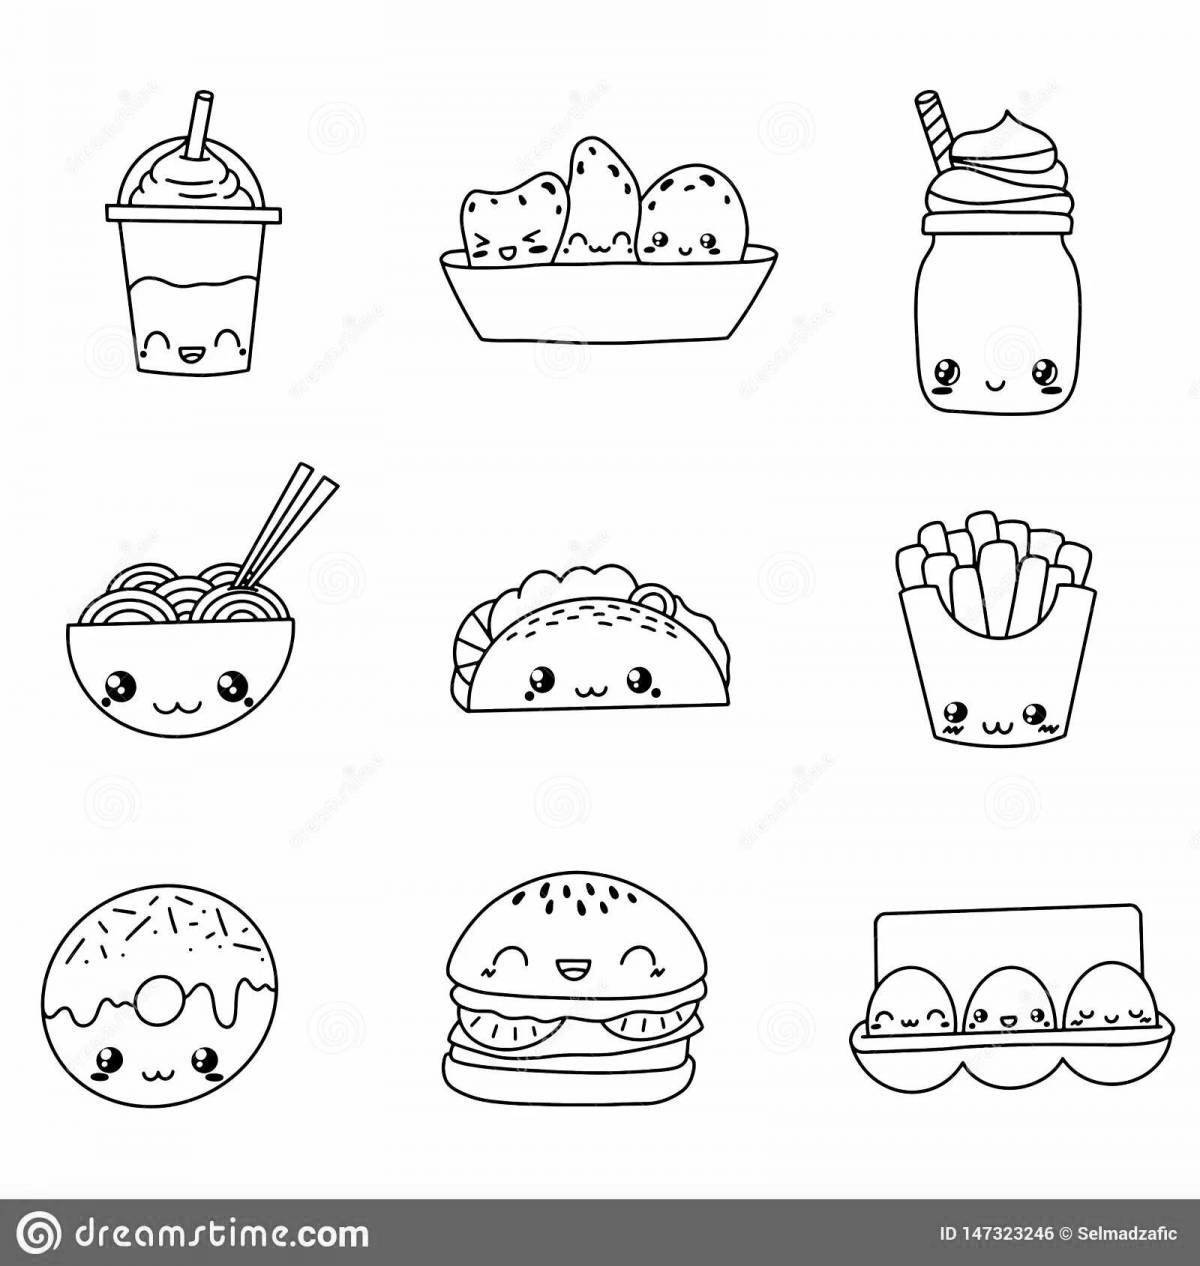 Glitter kawaii food coloring page